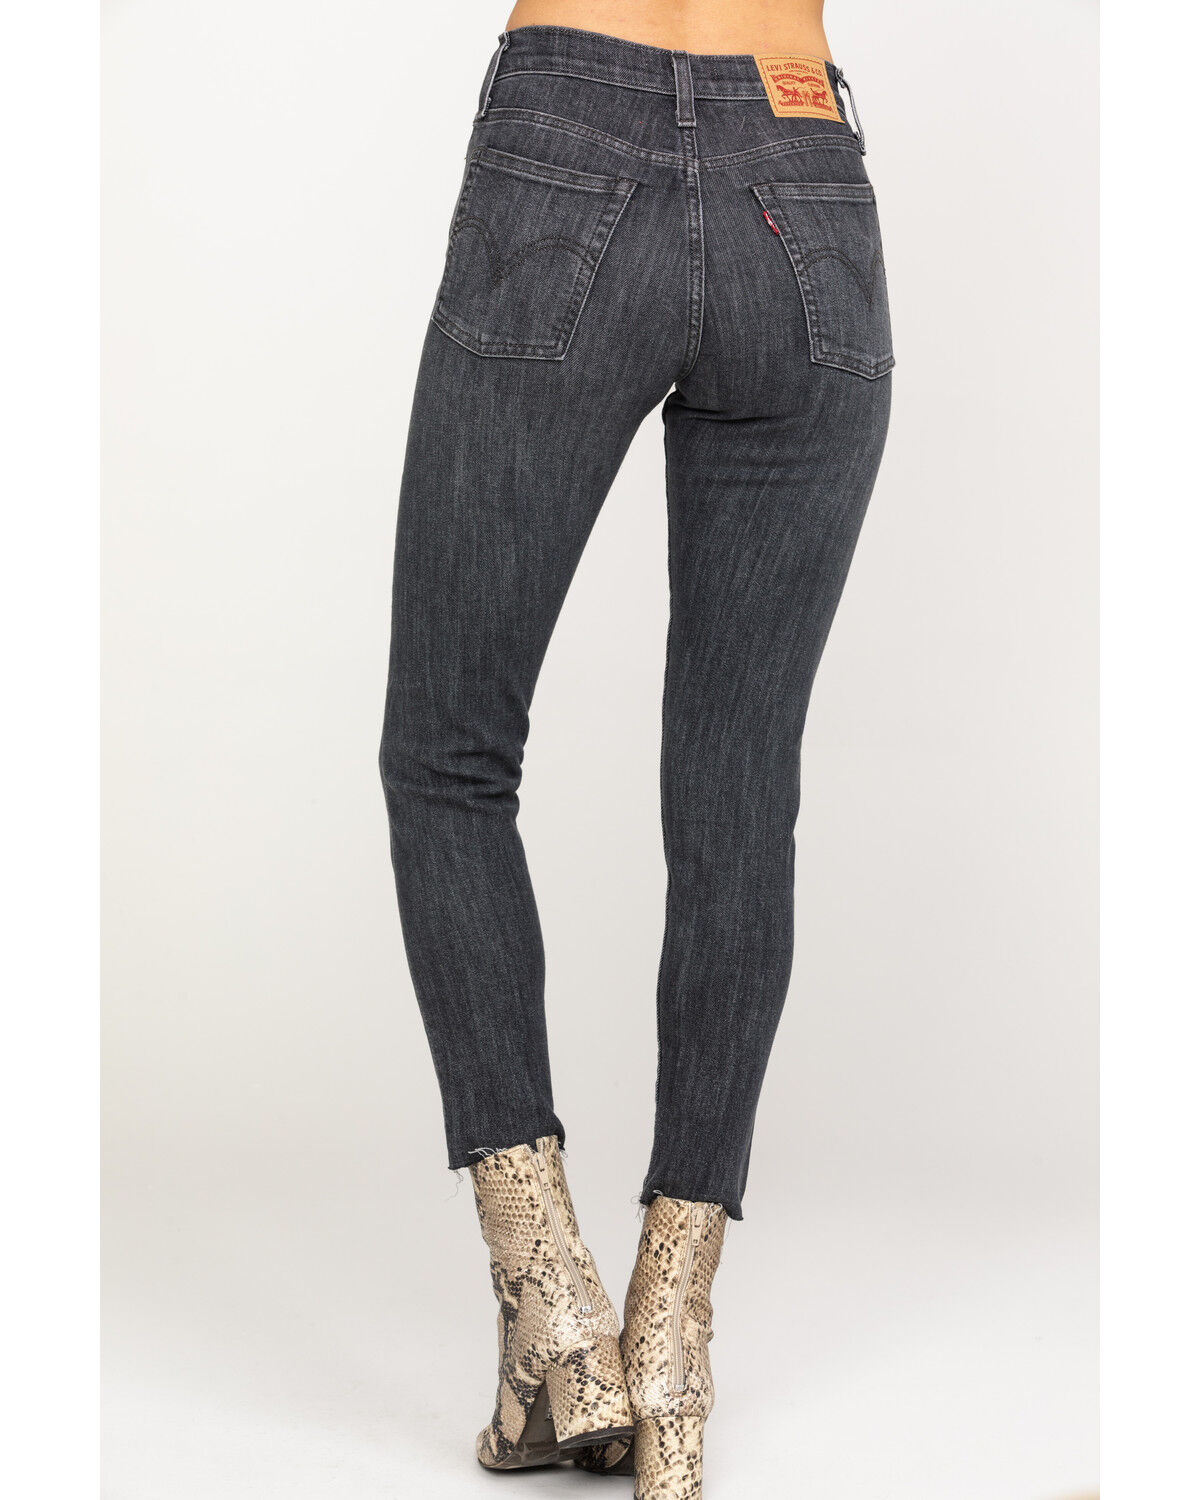 levi's wedgie skinny jeans black